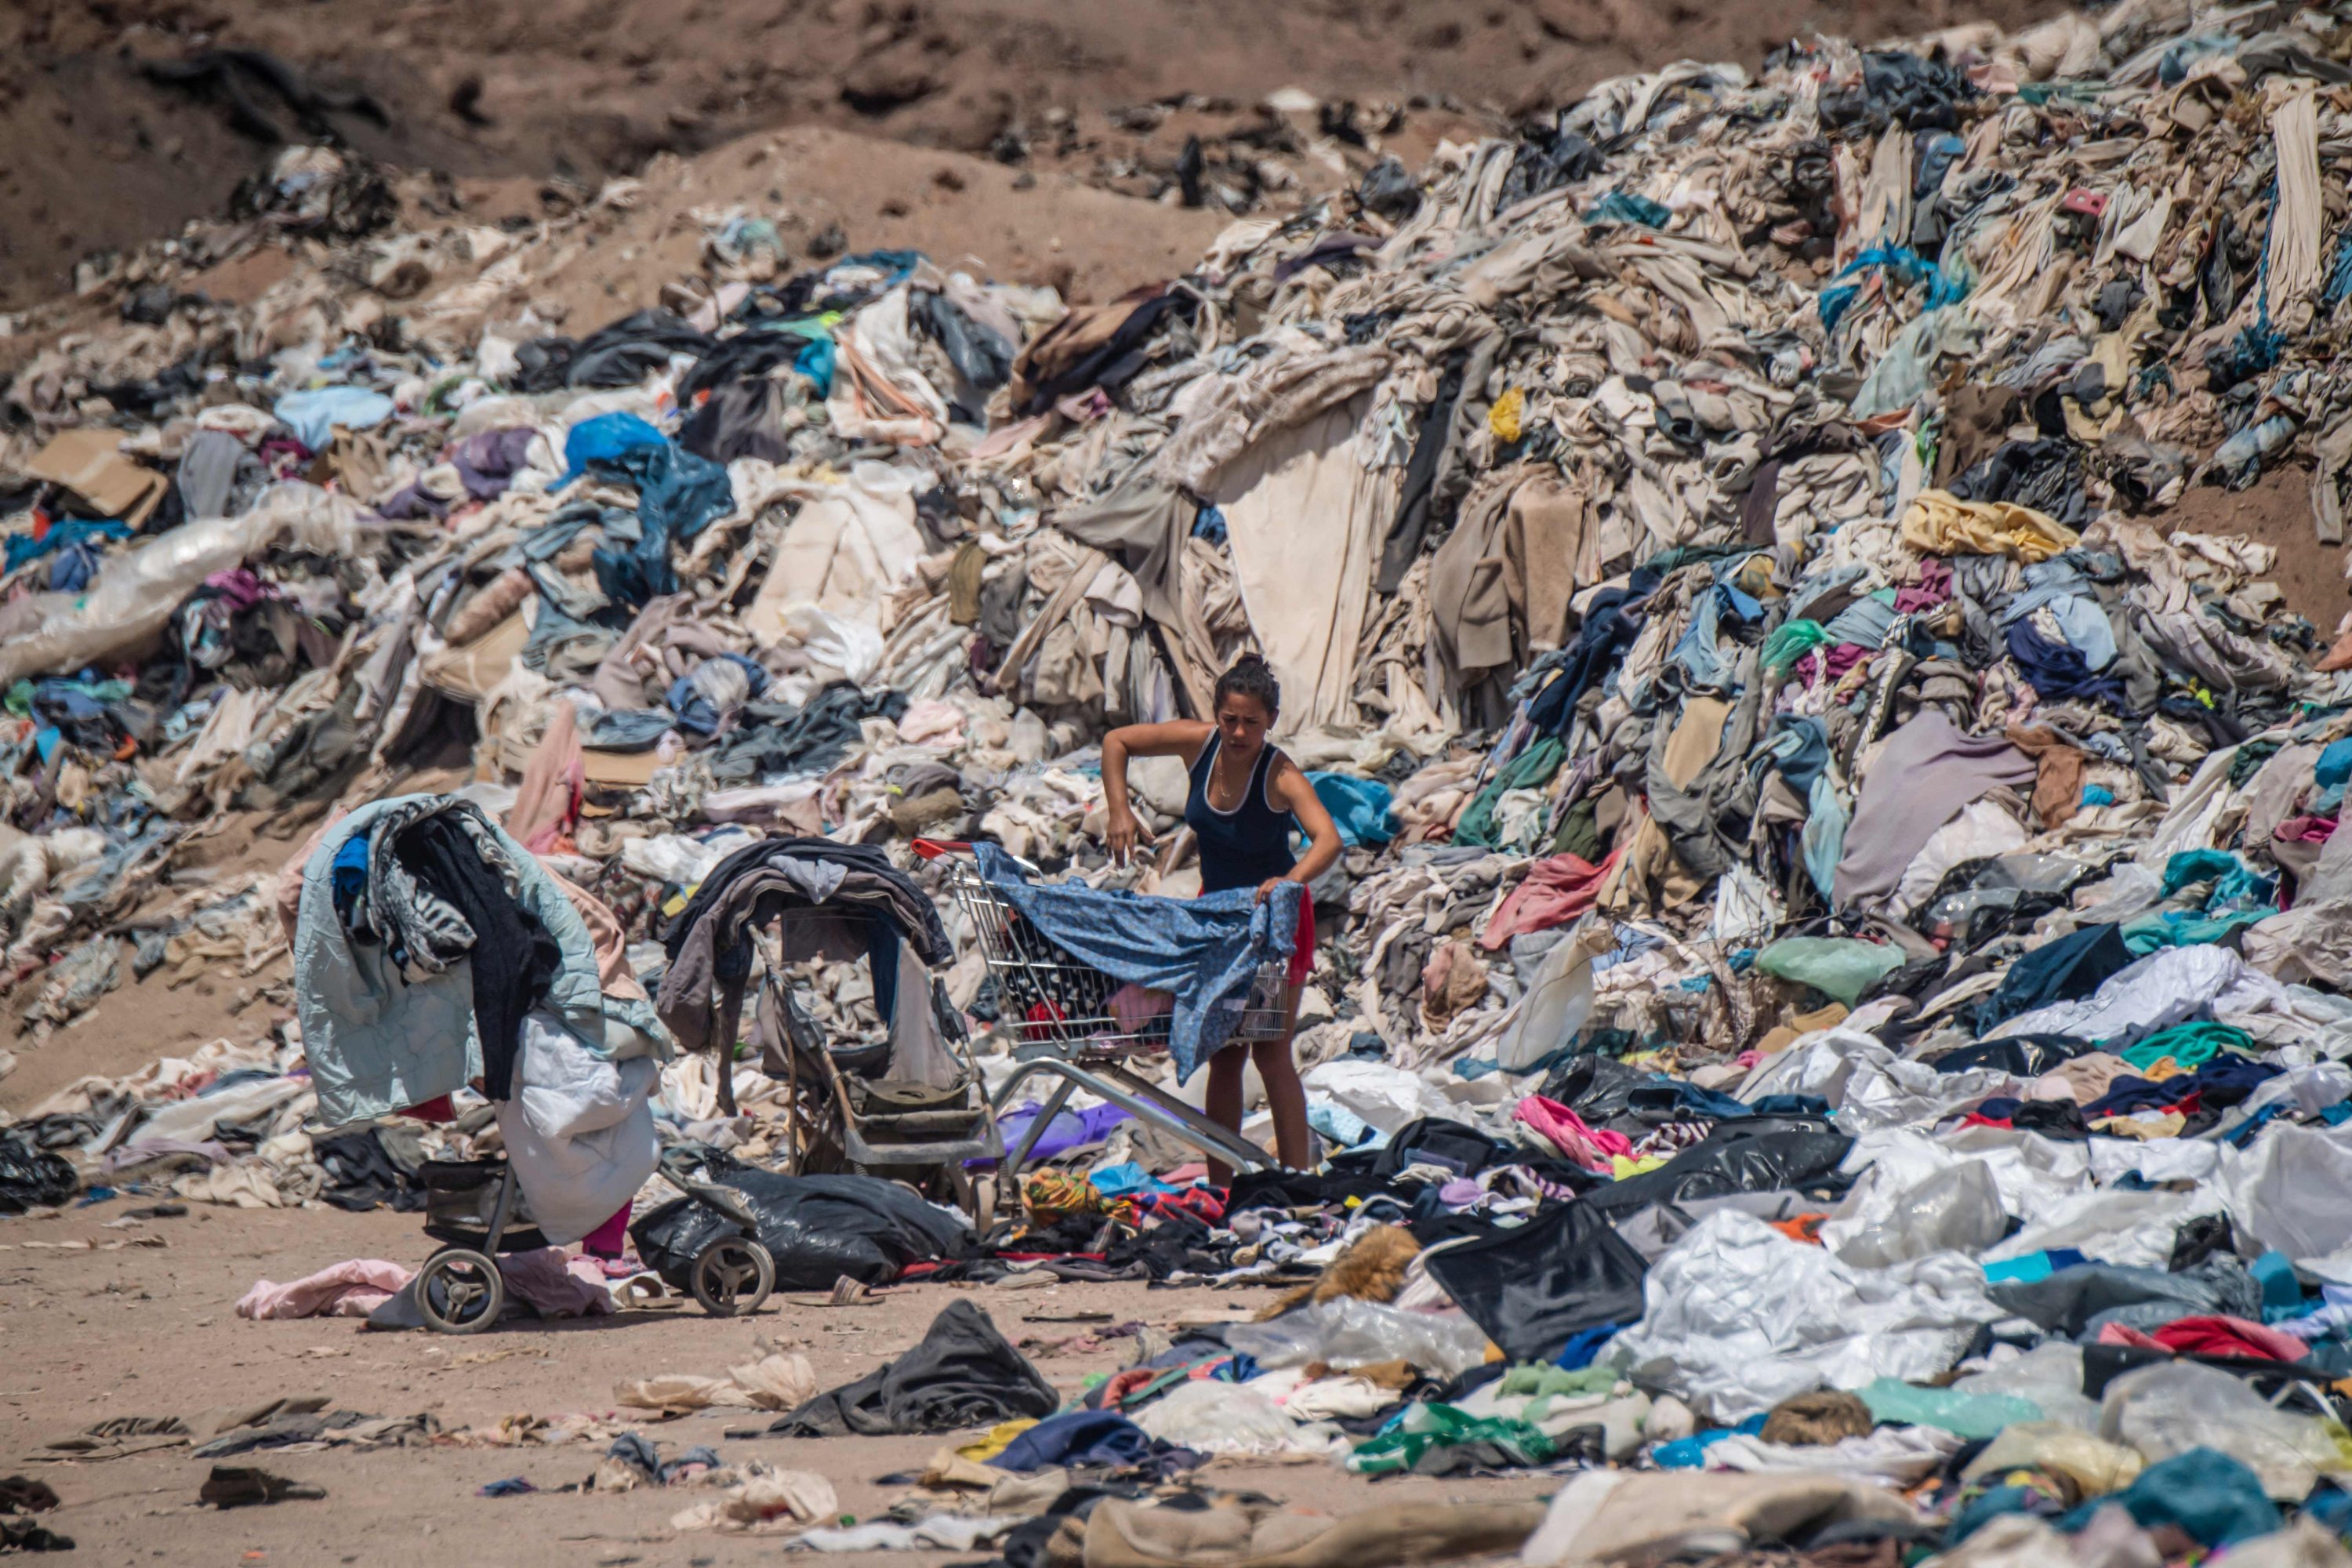 Wanita mencari pakaian bekas di antara banyak barang yang dibuang di gurun Atacama, di Alto Hospicio, Iquique, Chili, 26 September 2021. (AFP Photo)